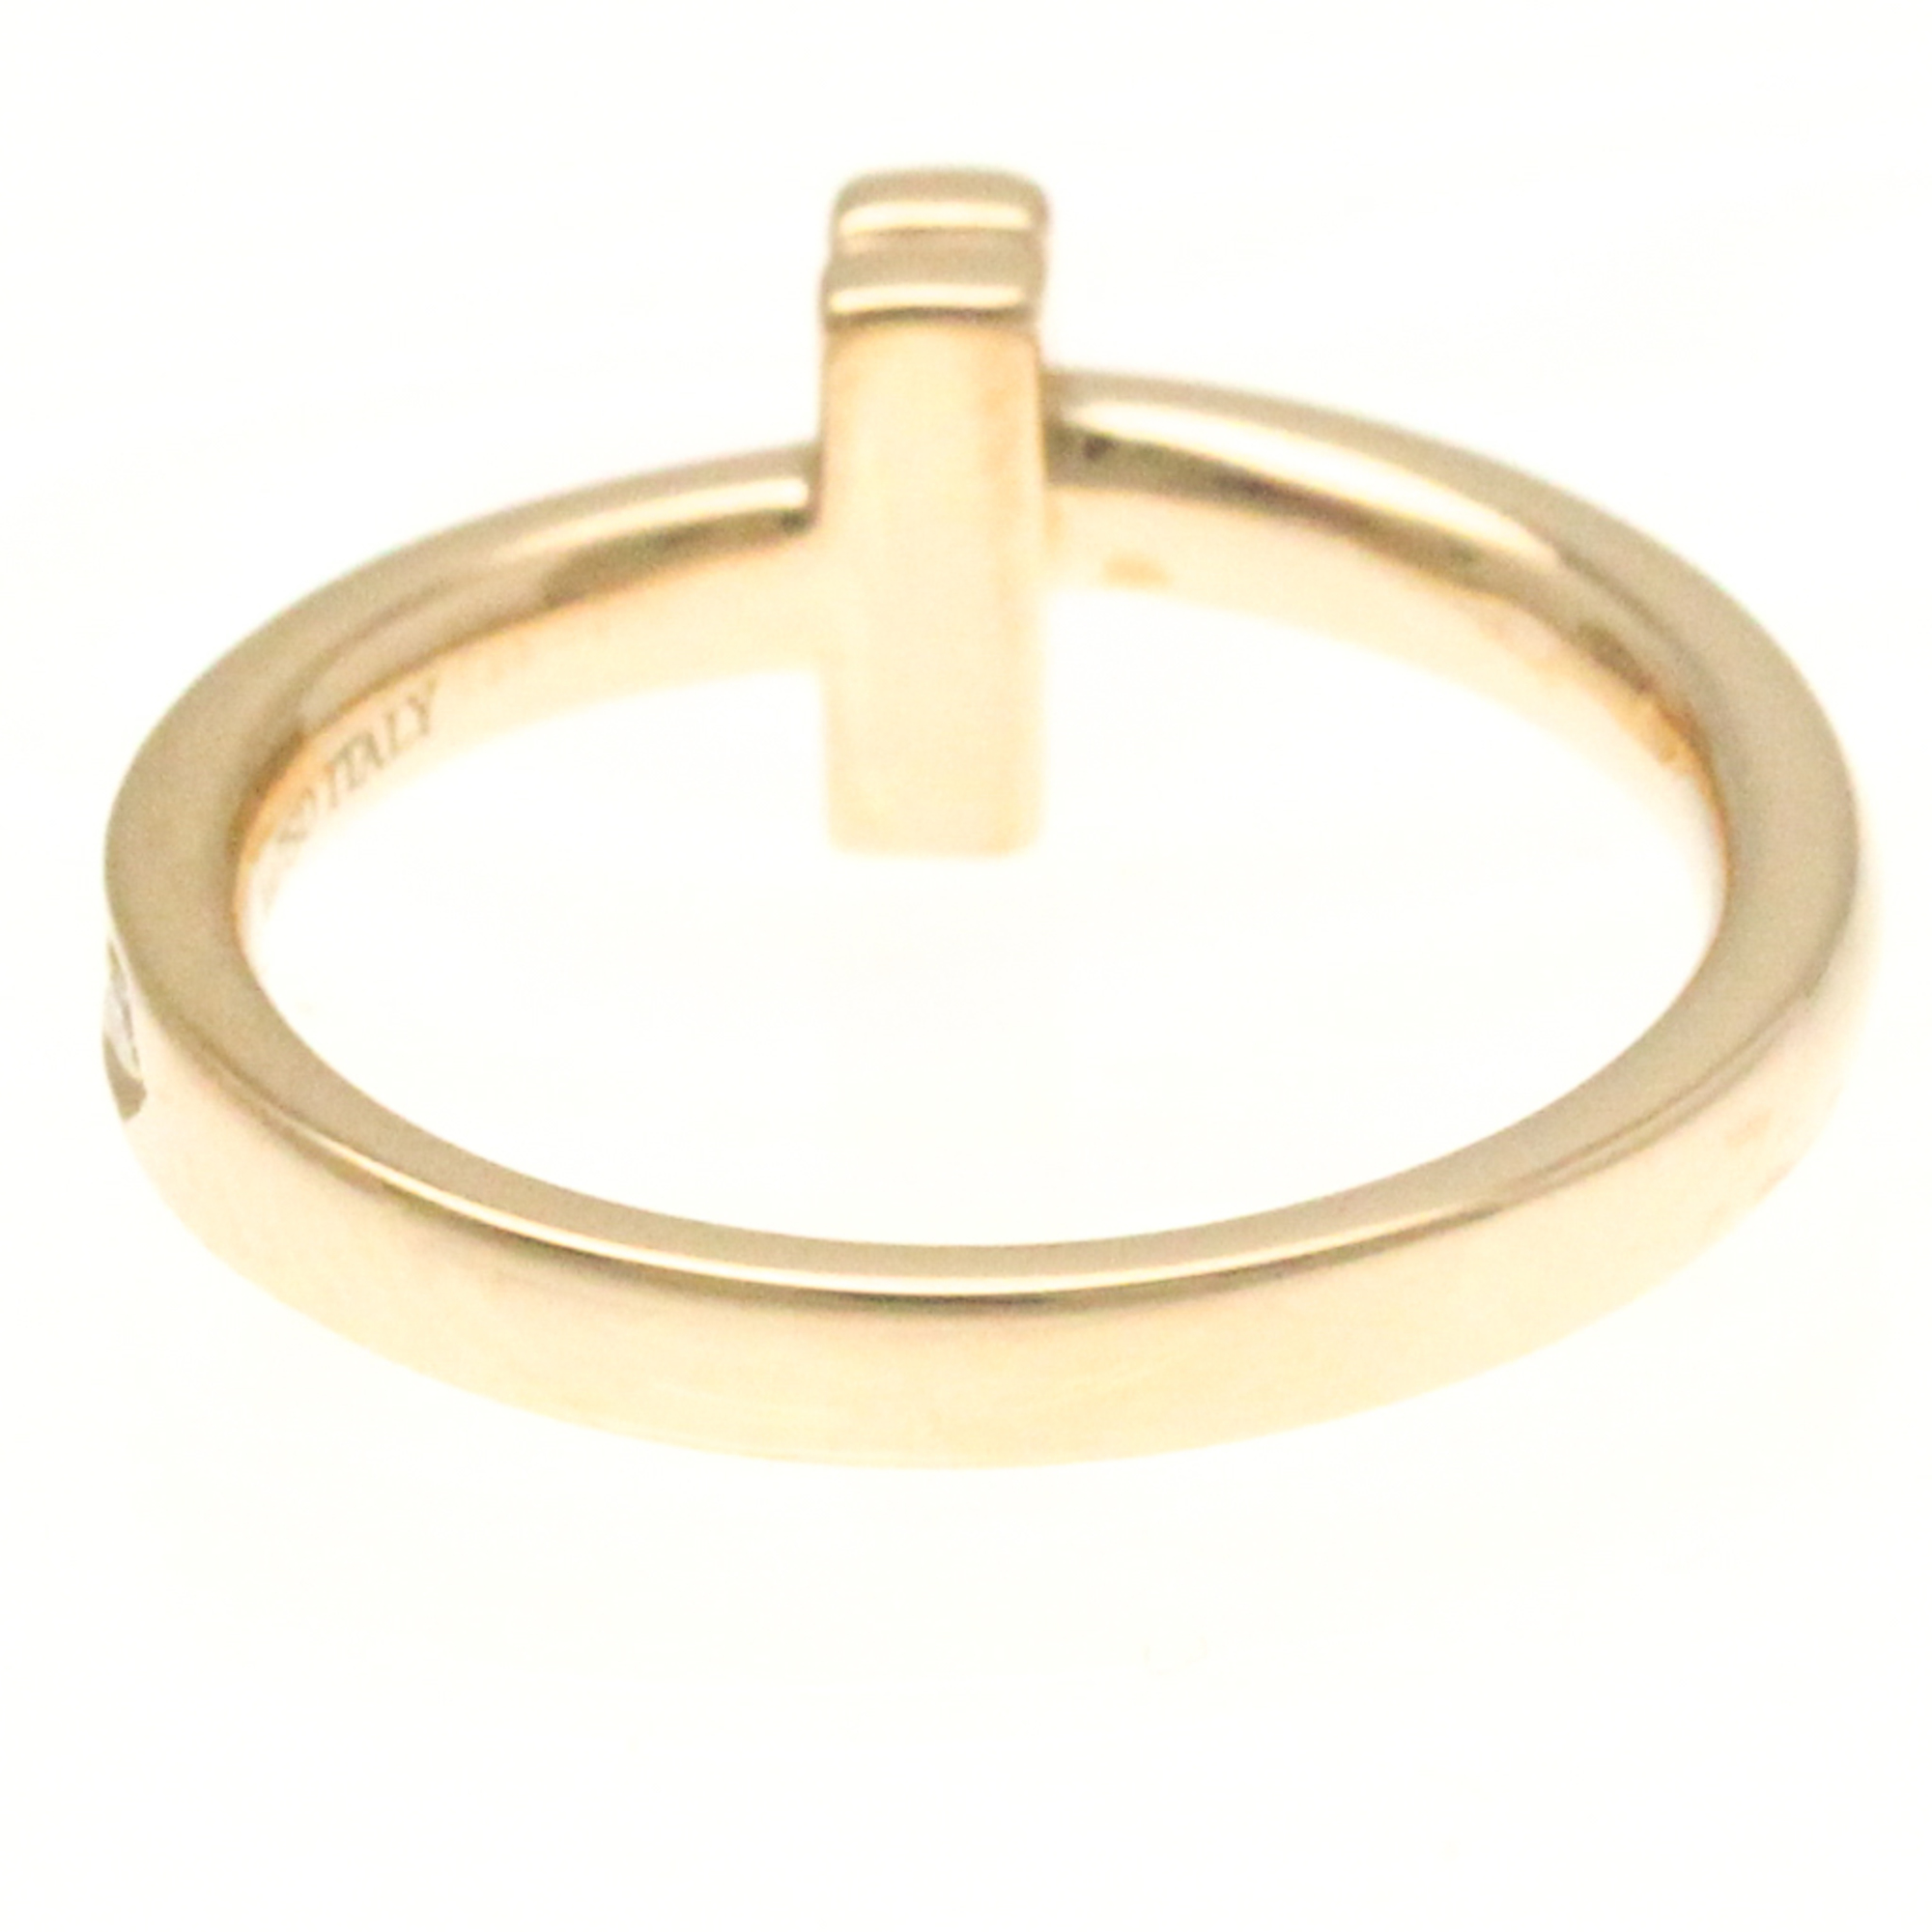 Tiffany T One Ring Pink Gold (18K) Fashion Diamond Band Ring Pink Gold